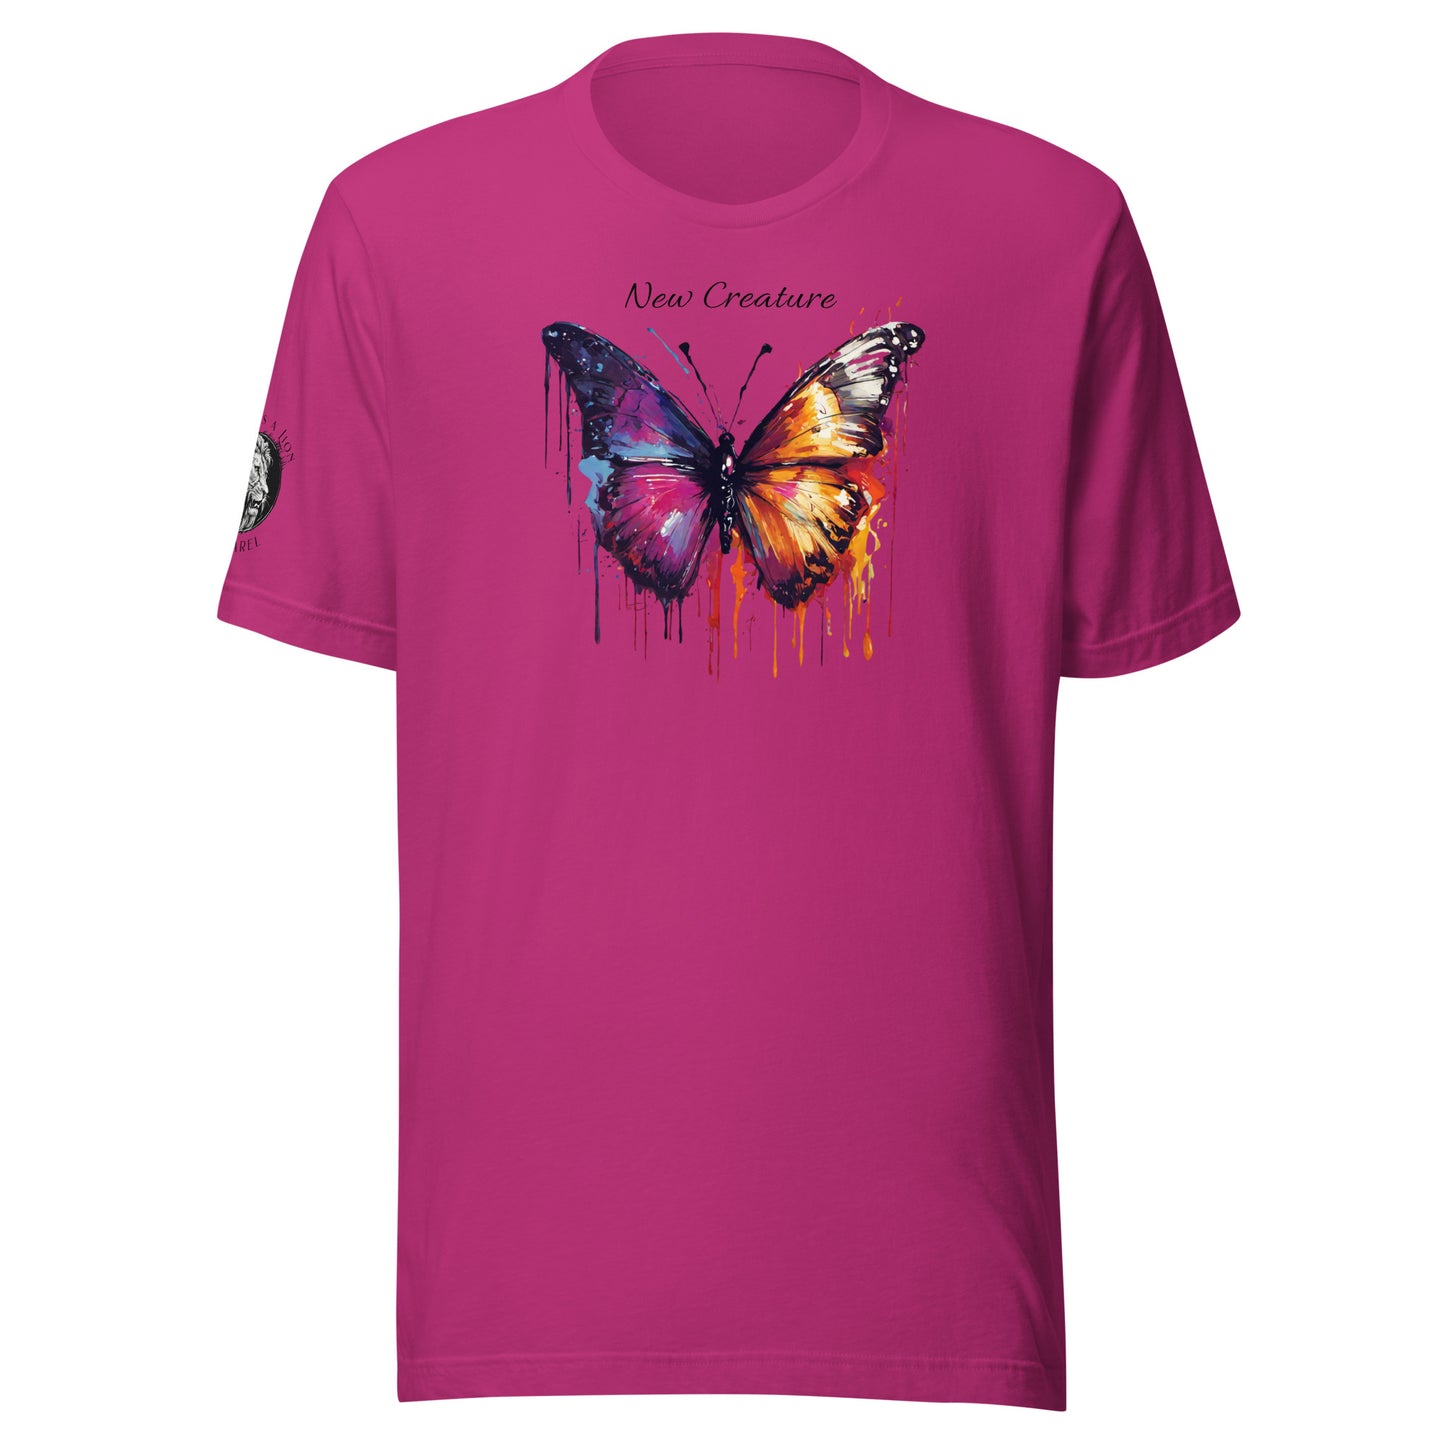 New Creature Christian Women's Beautiful Graphic Classic T-Shirt Berry